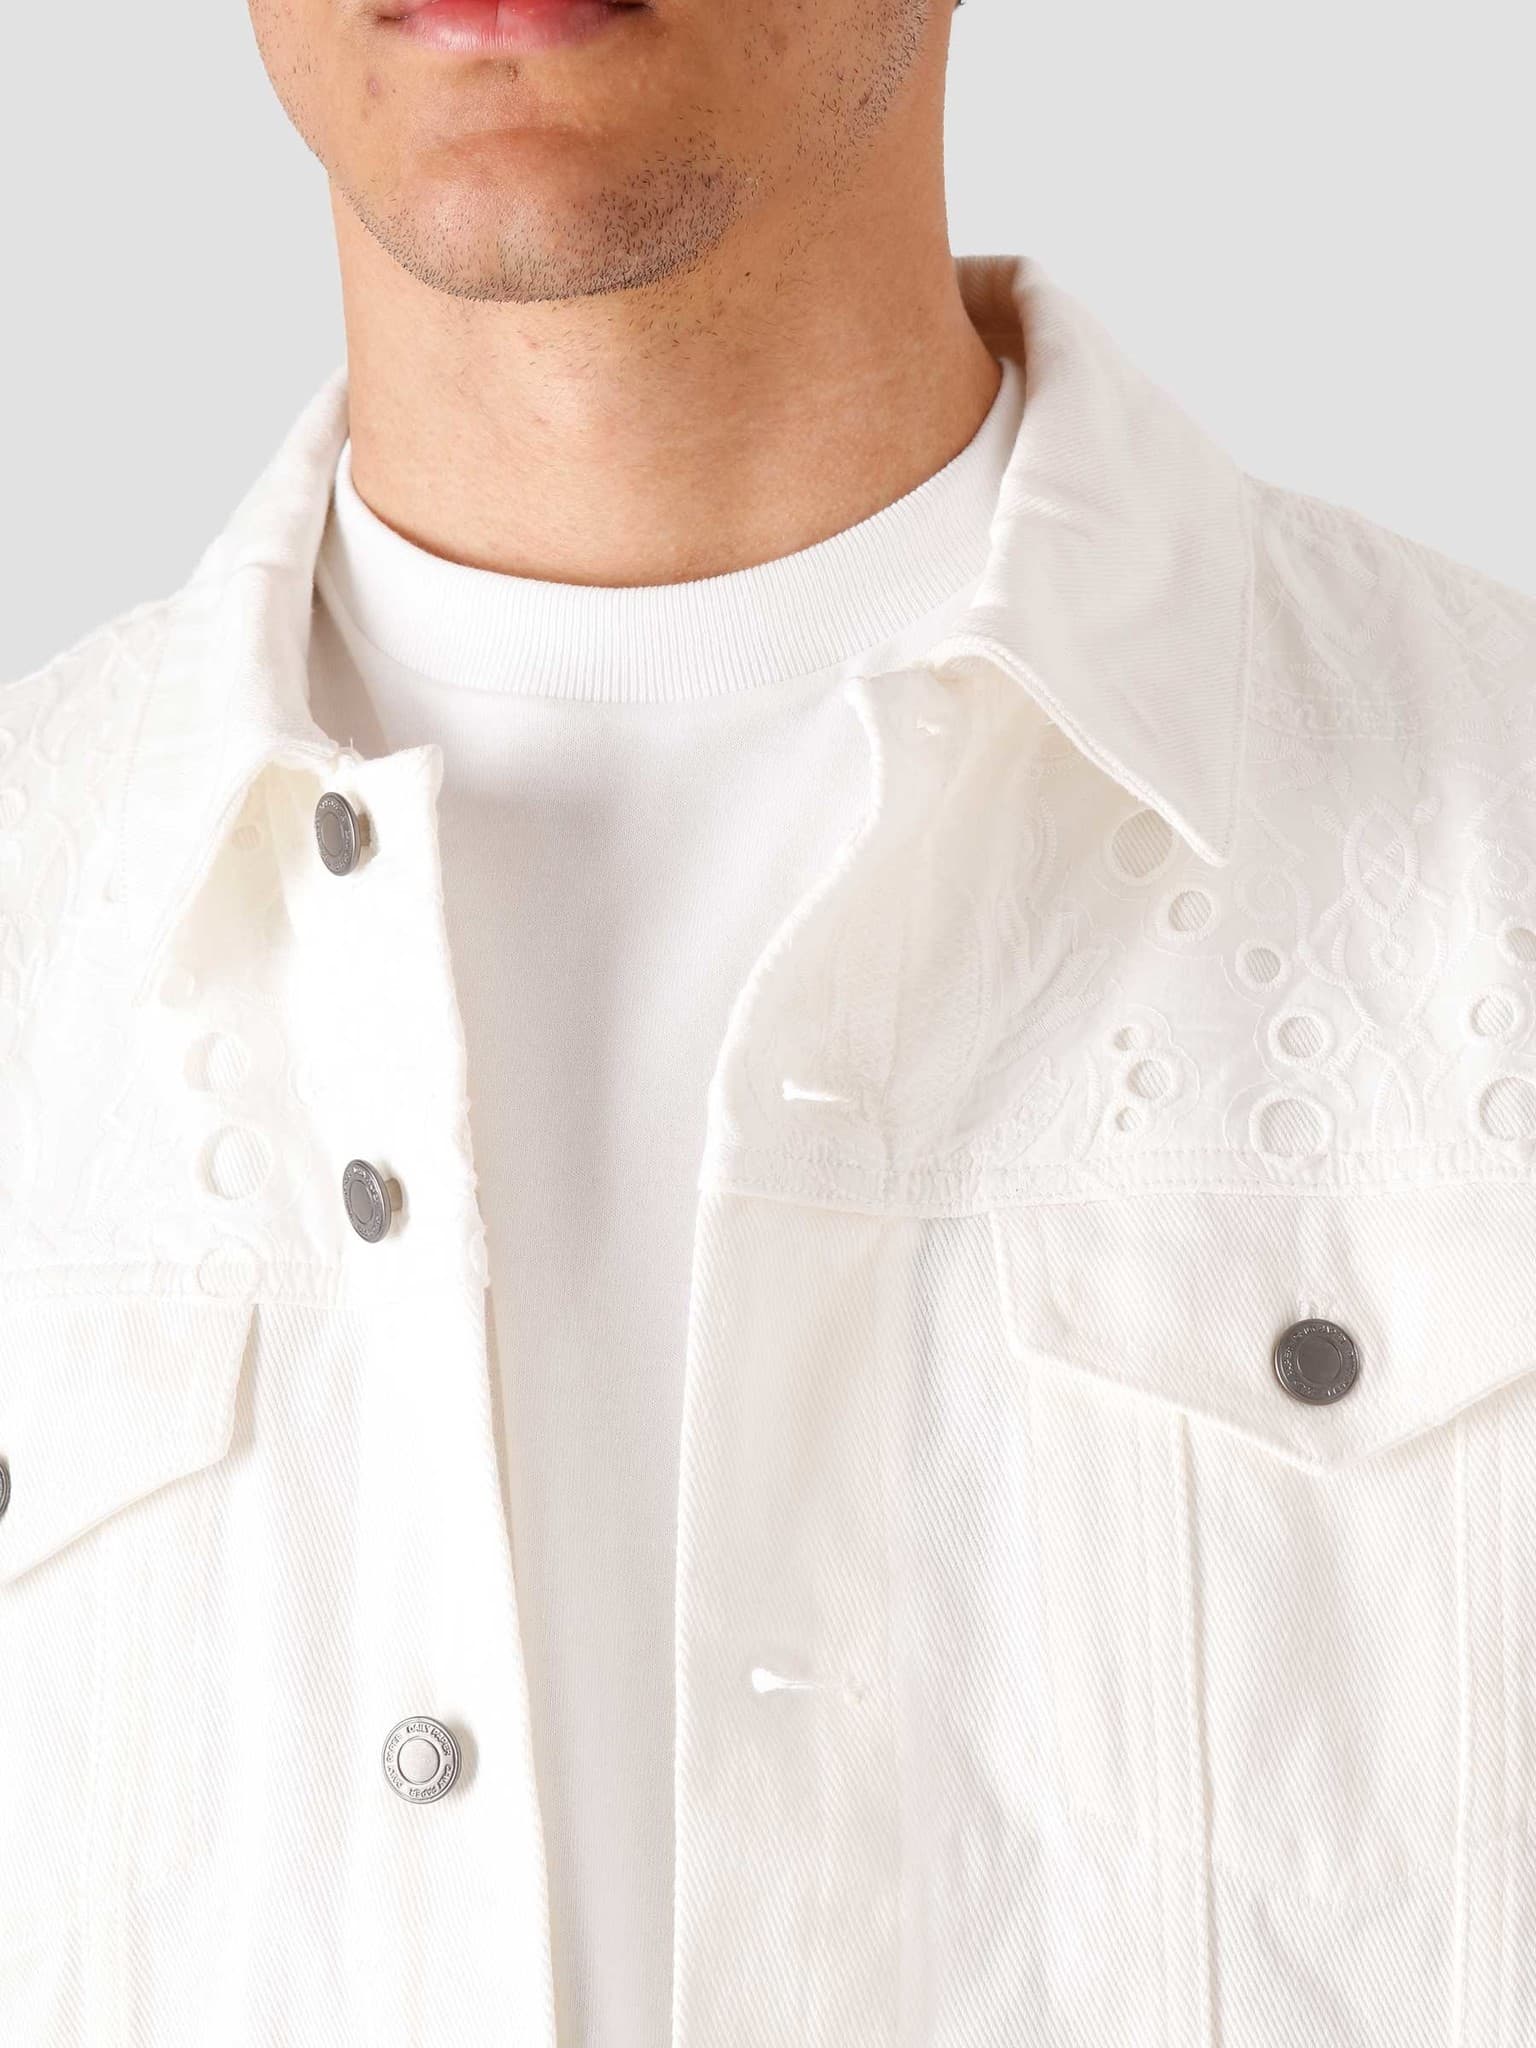 Kajean Jeans Jacket White 2111153